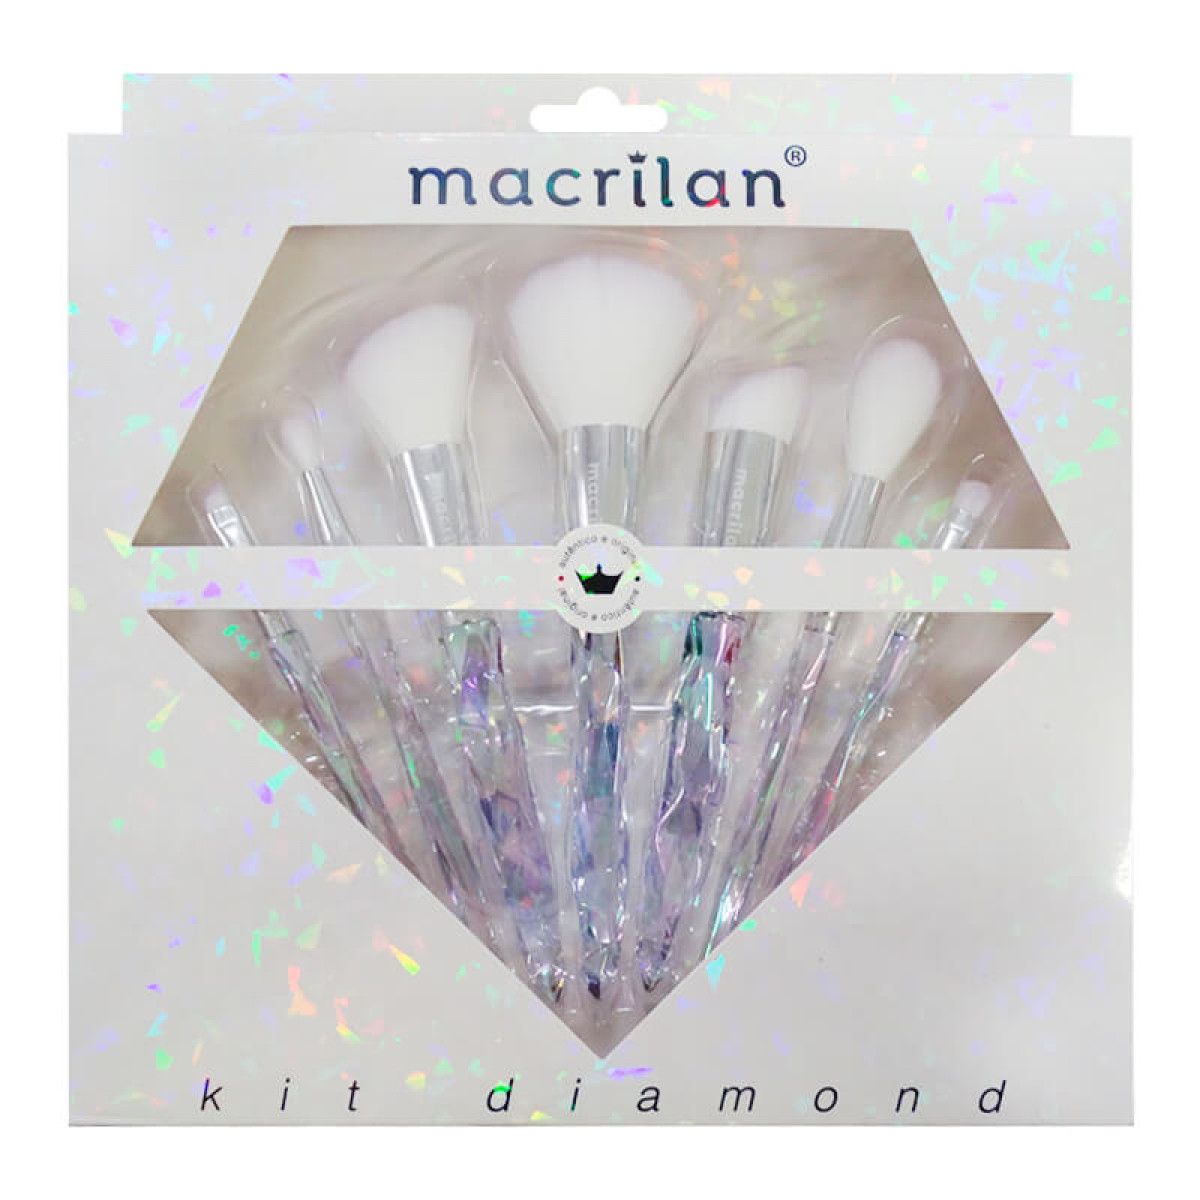 Kit diamond - Macrilan